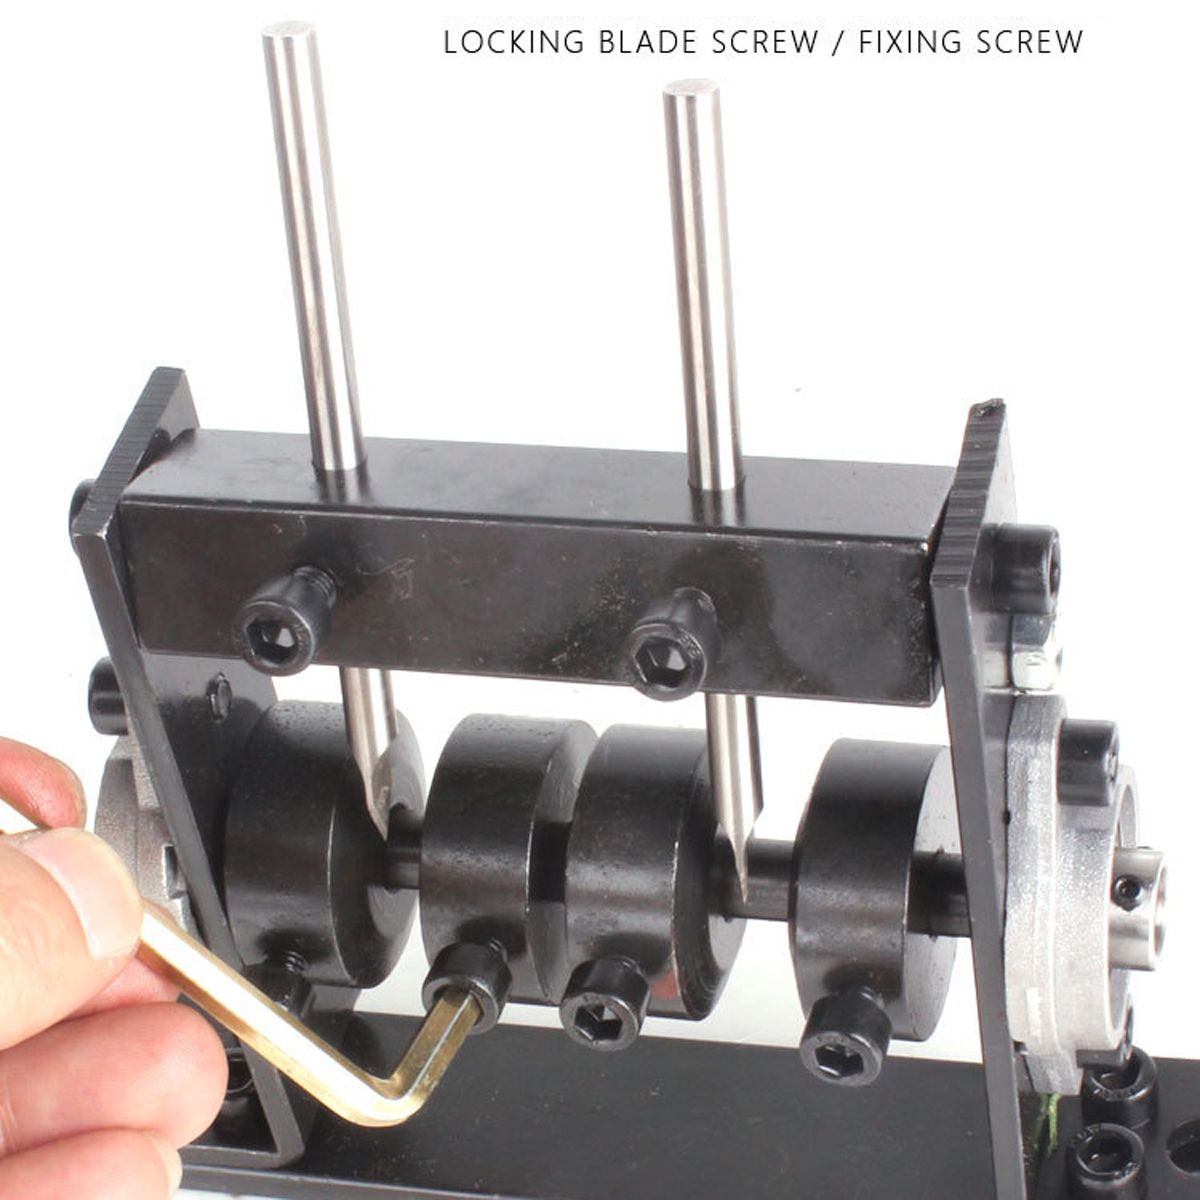 Manual-Copper-Wire-Stripping-Machine-1-30mm-Scrap-Cable-Peeling-Stripper-1661739